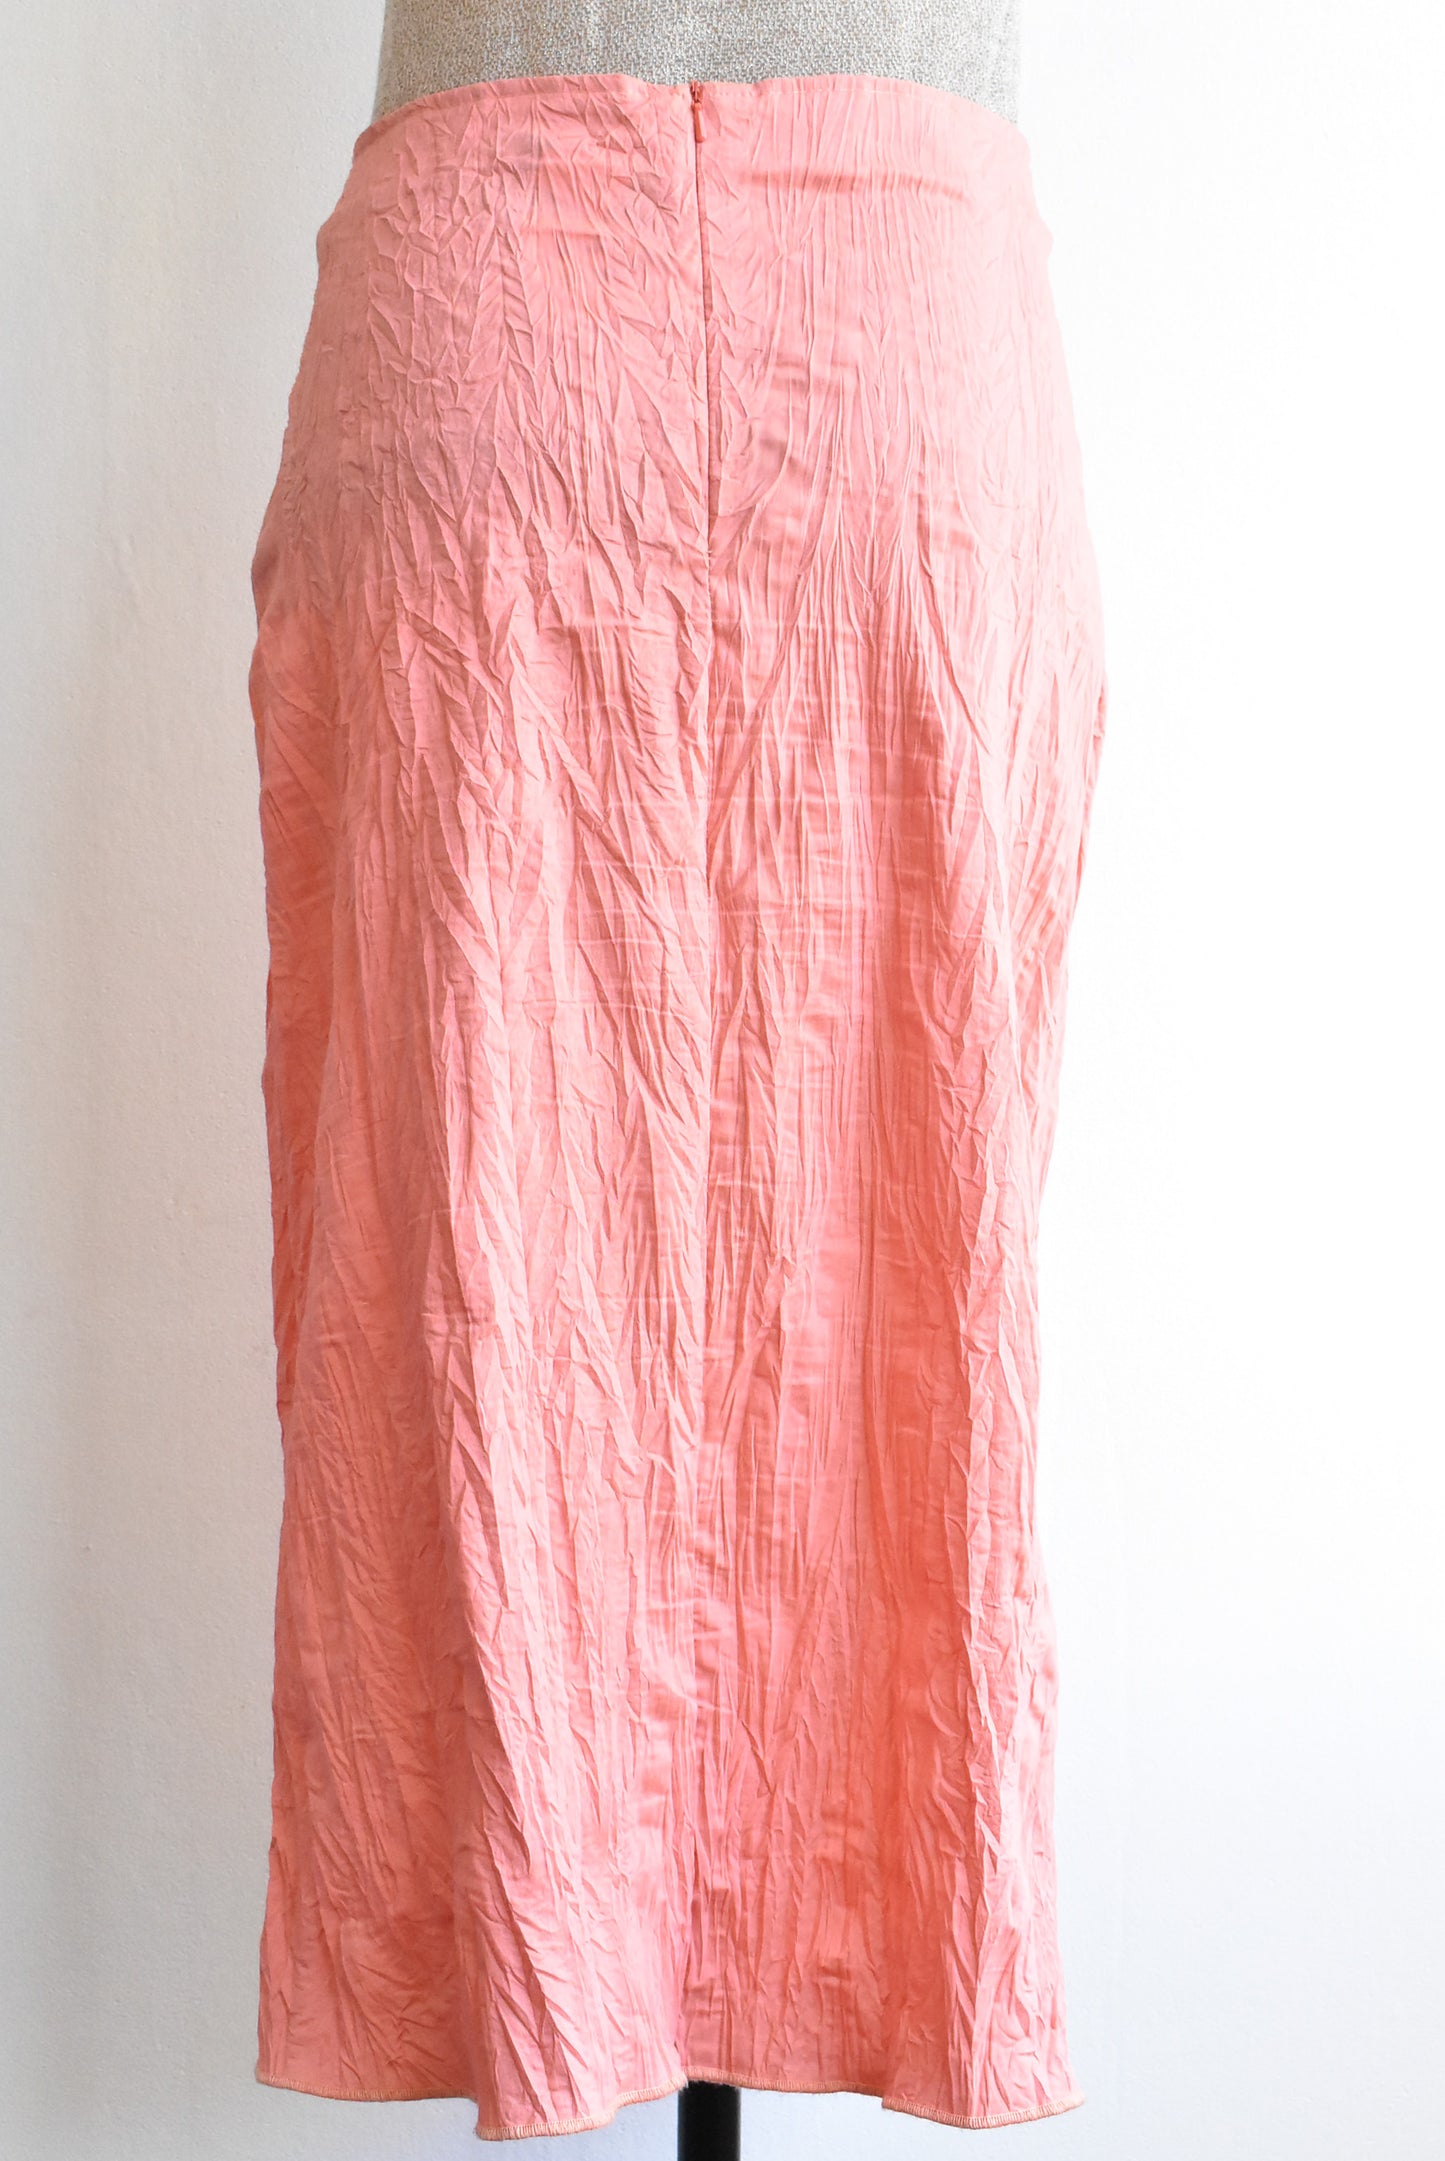 Wild South peach midi skirt, size 10